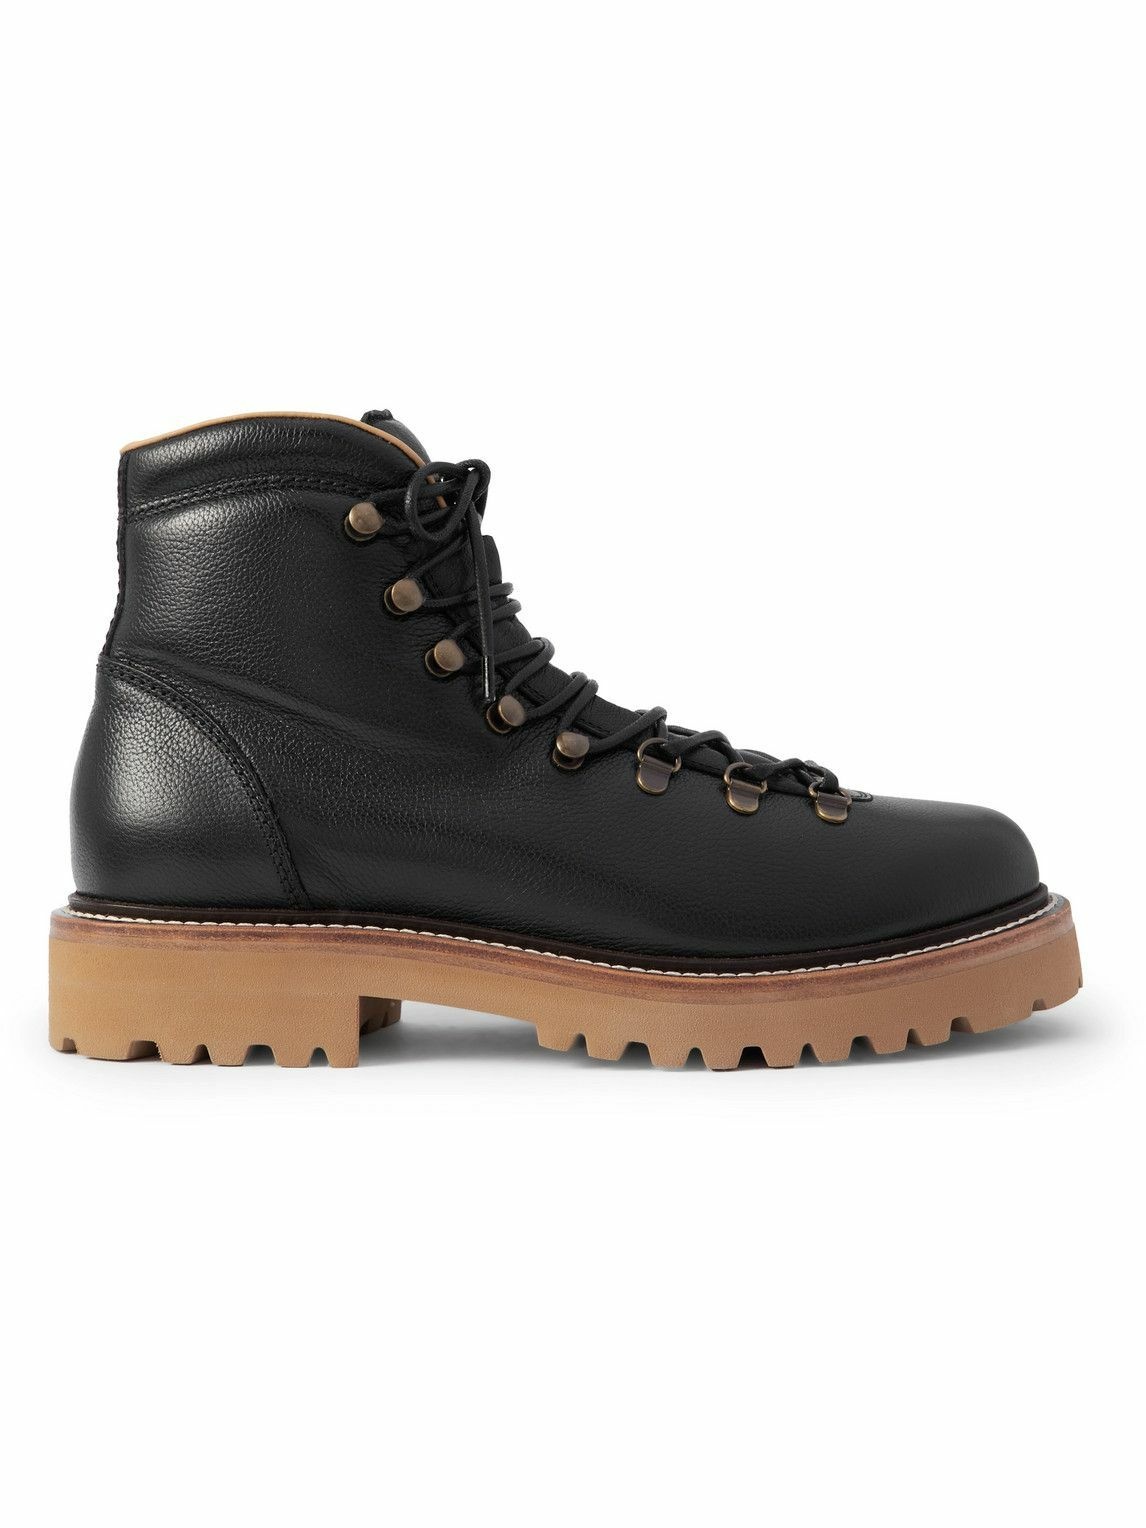 Brunello Cucinelli - Leather Hiking Boots - Black Brunello Cucinelli